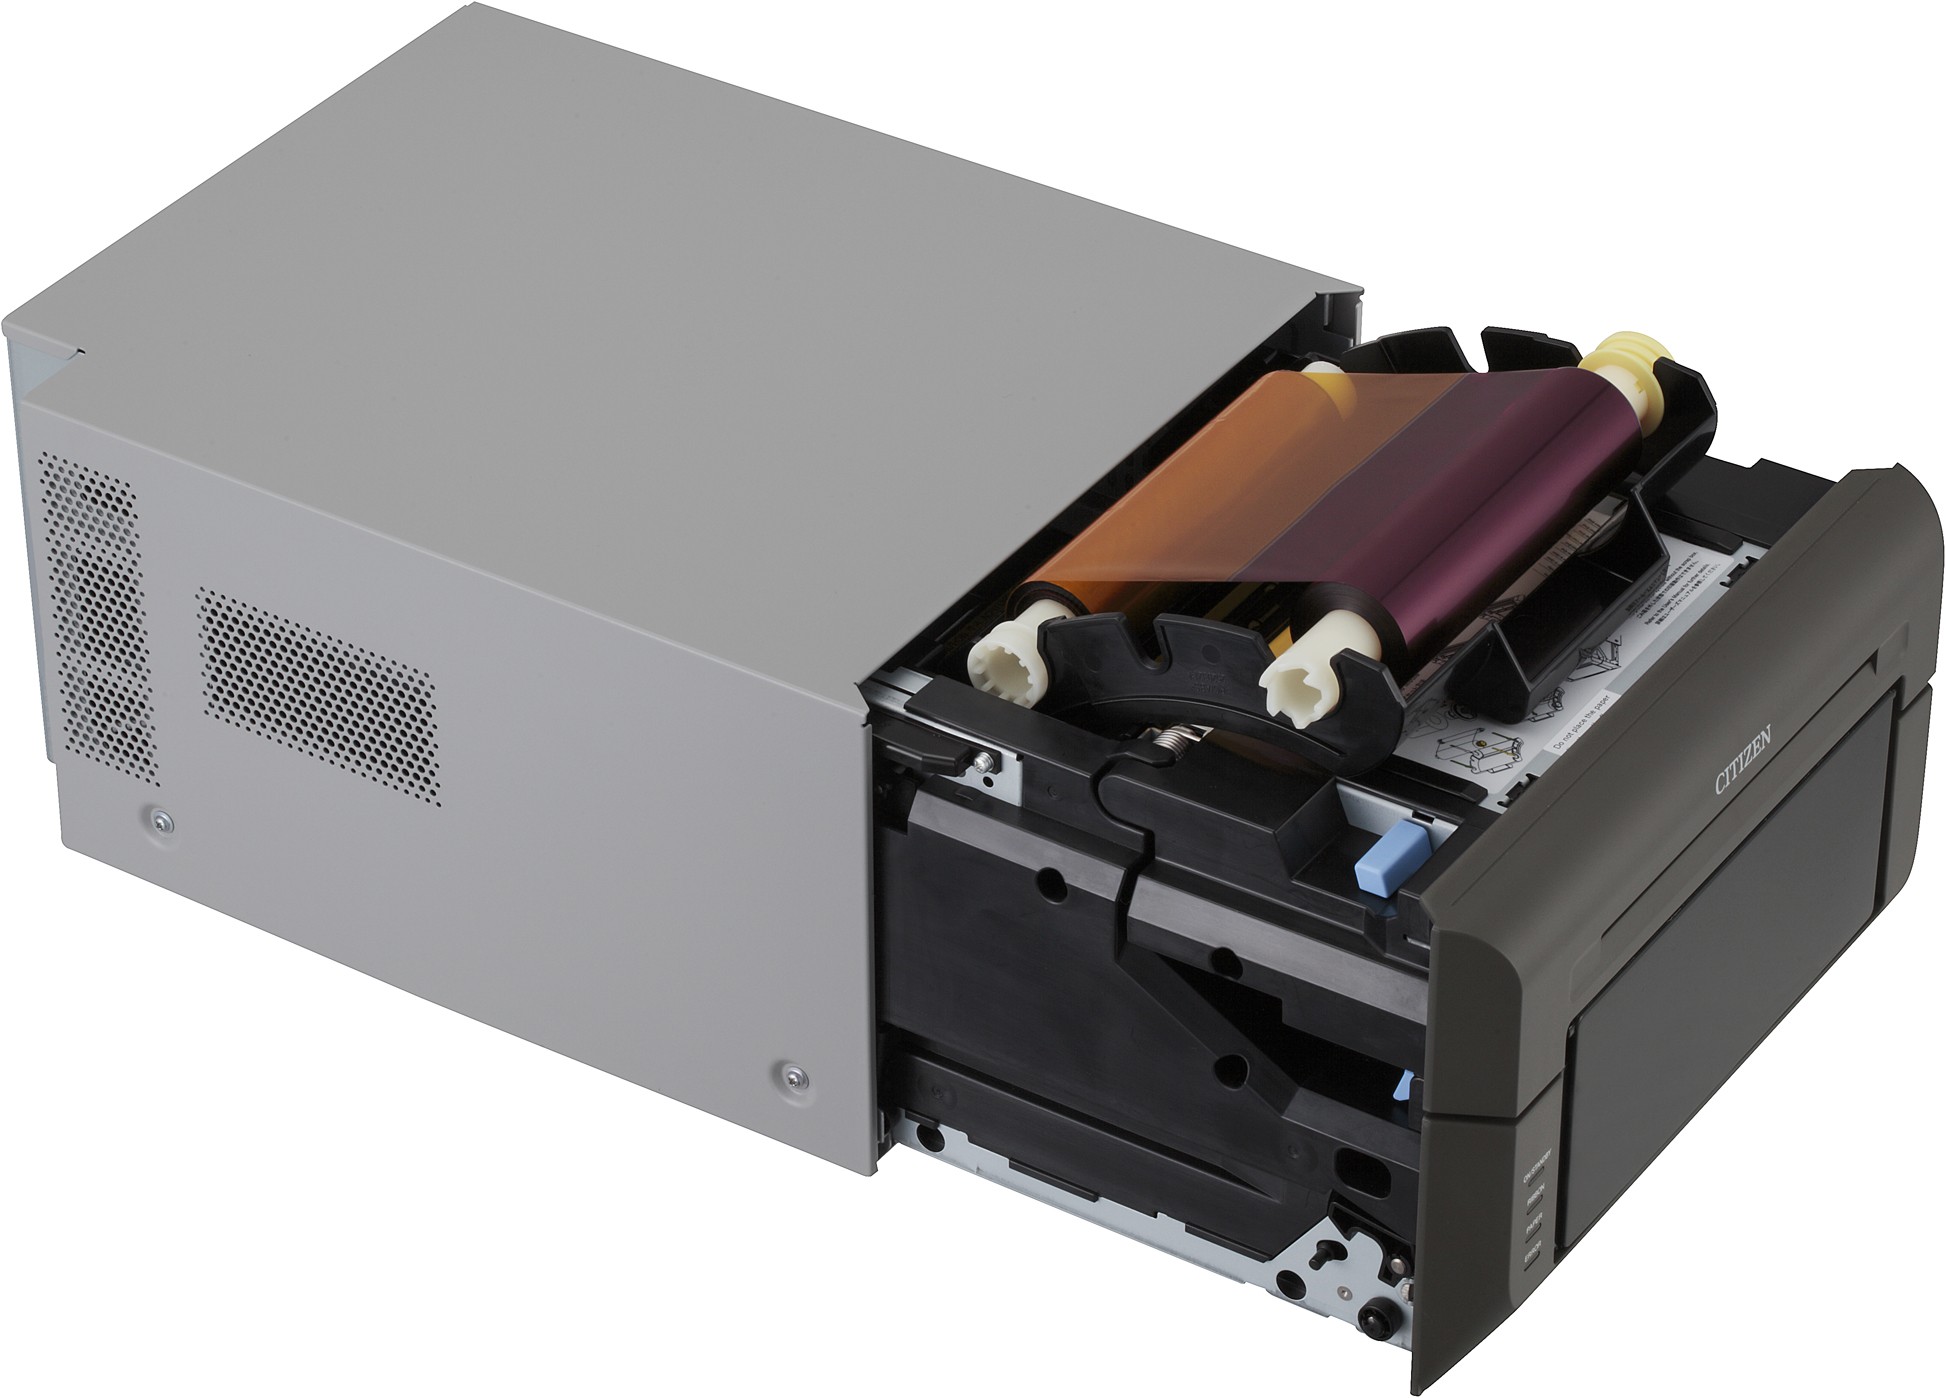 CX-02 Studio Ribon Printer